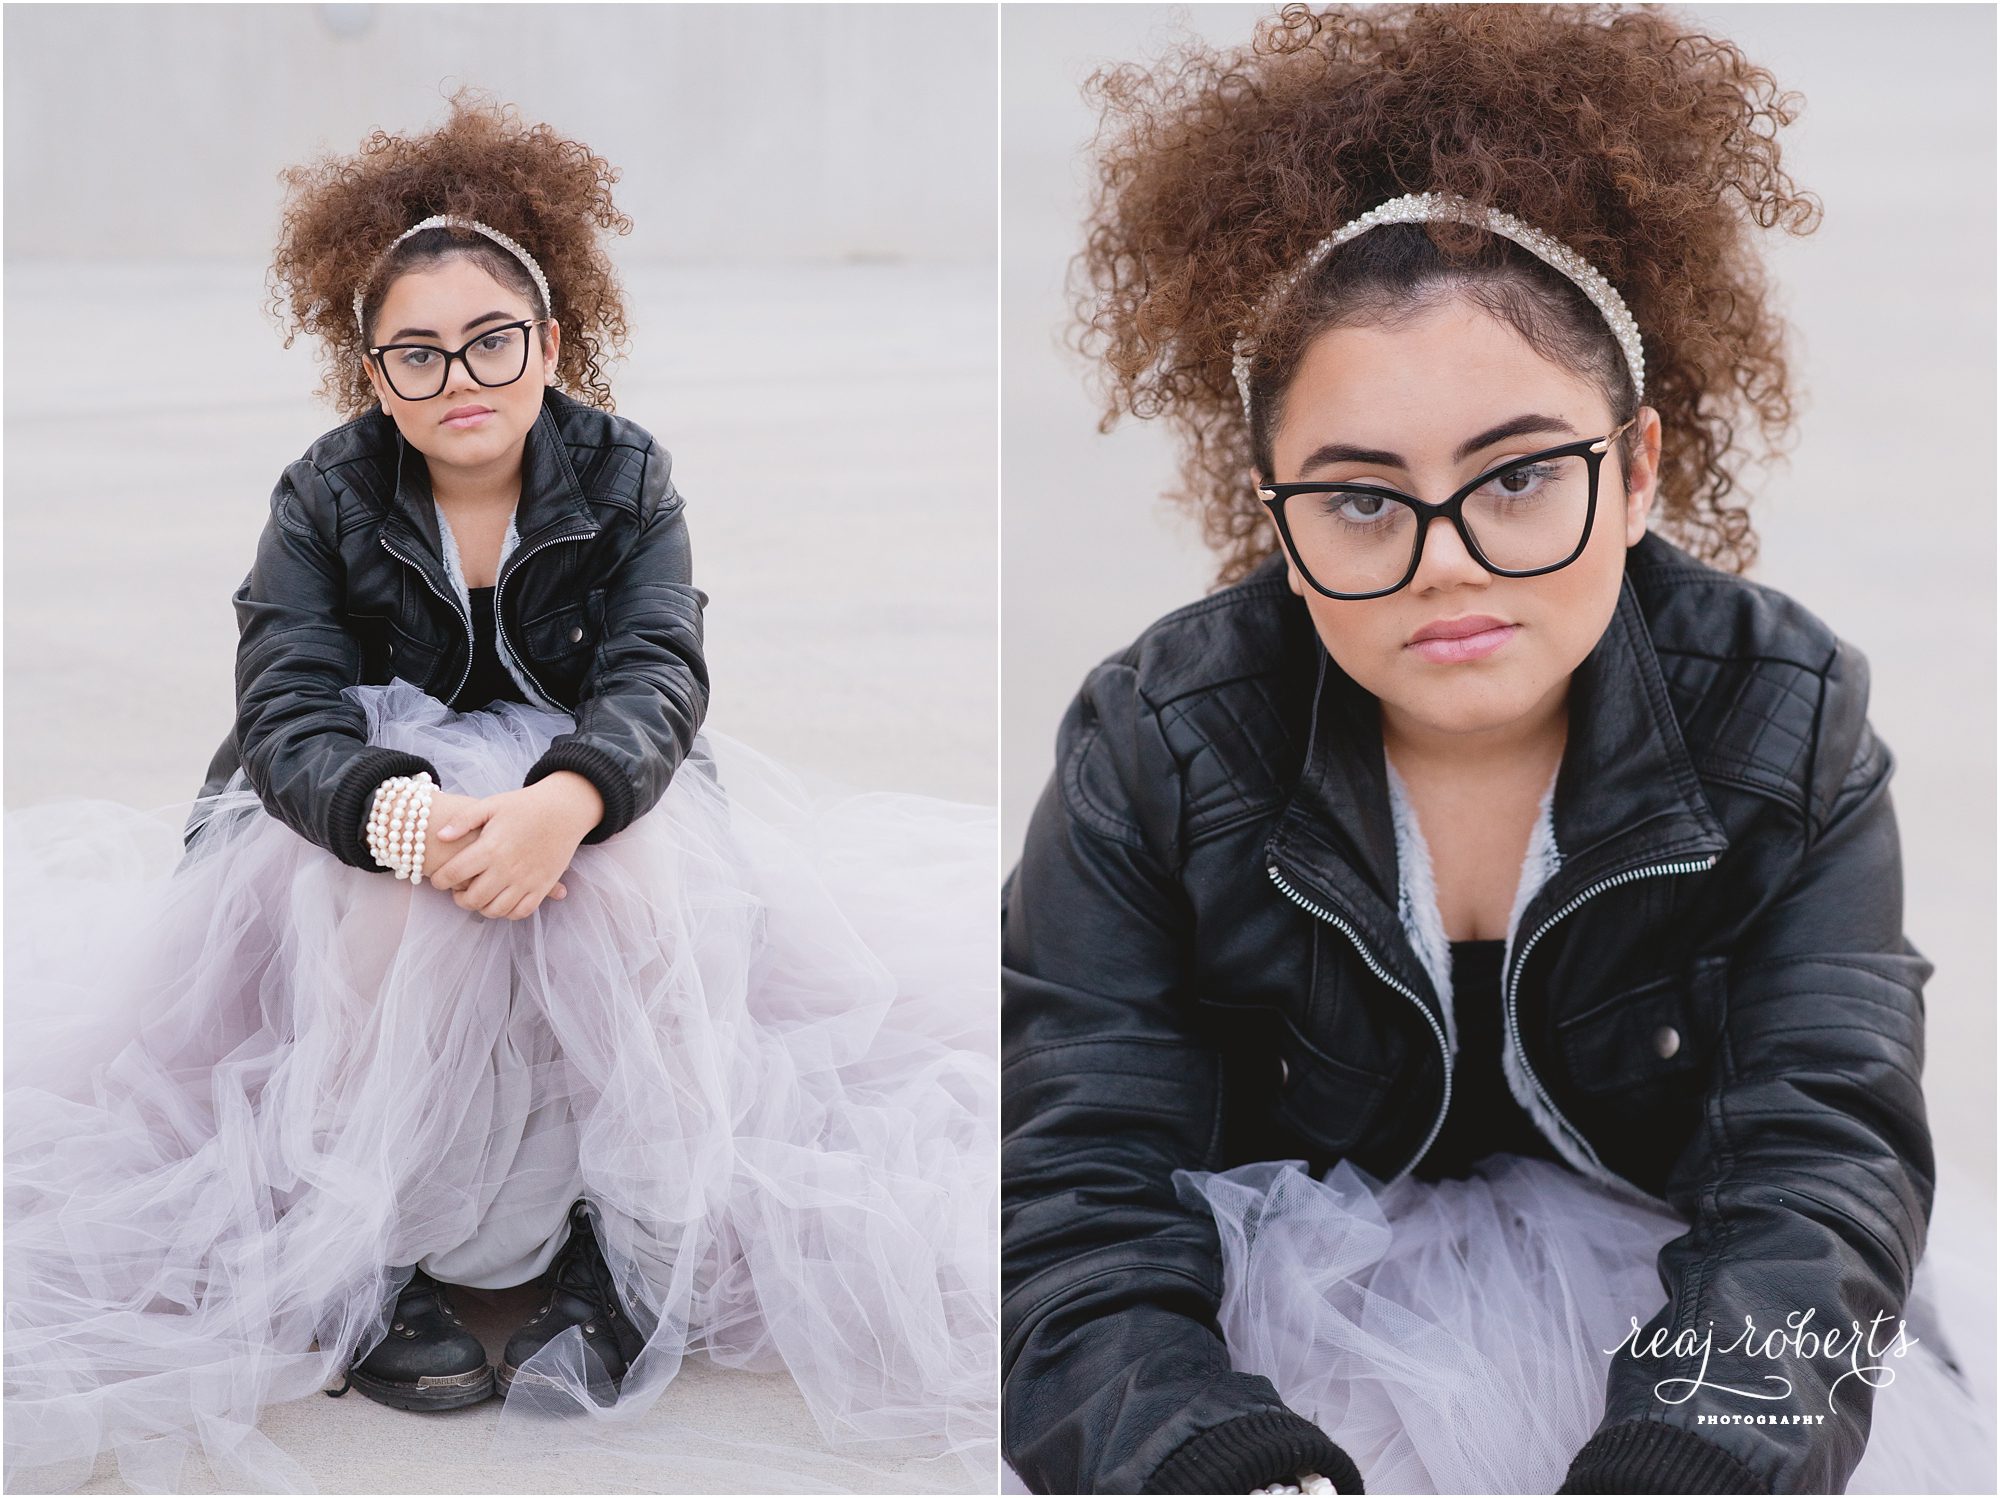 Young talent headshot | © Reaj Roberts Photography | Chandler, Arizona